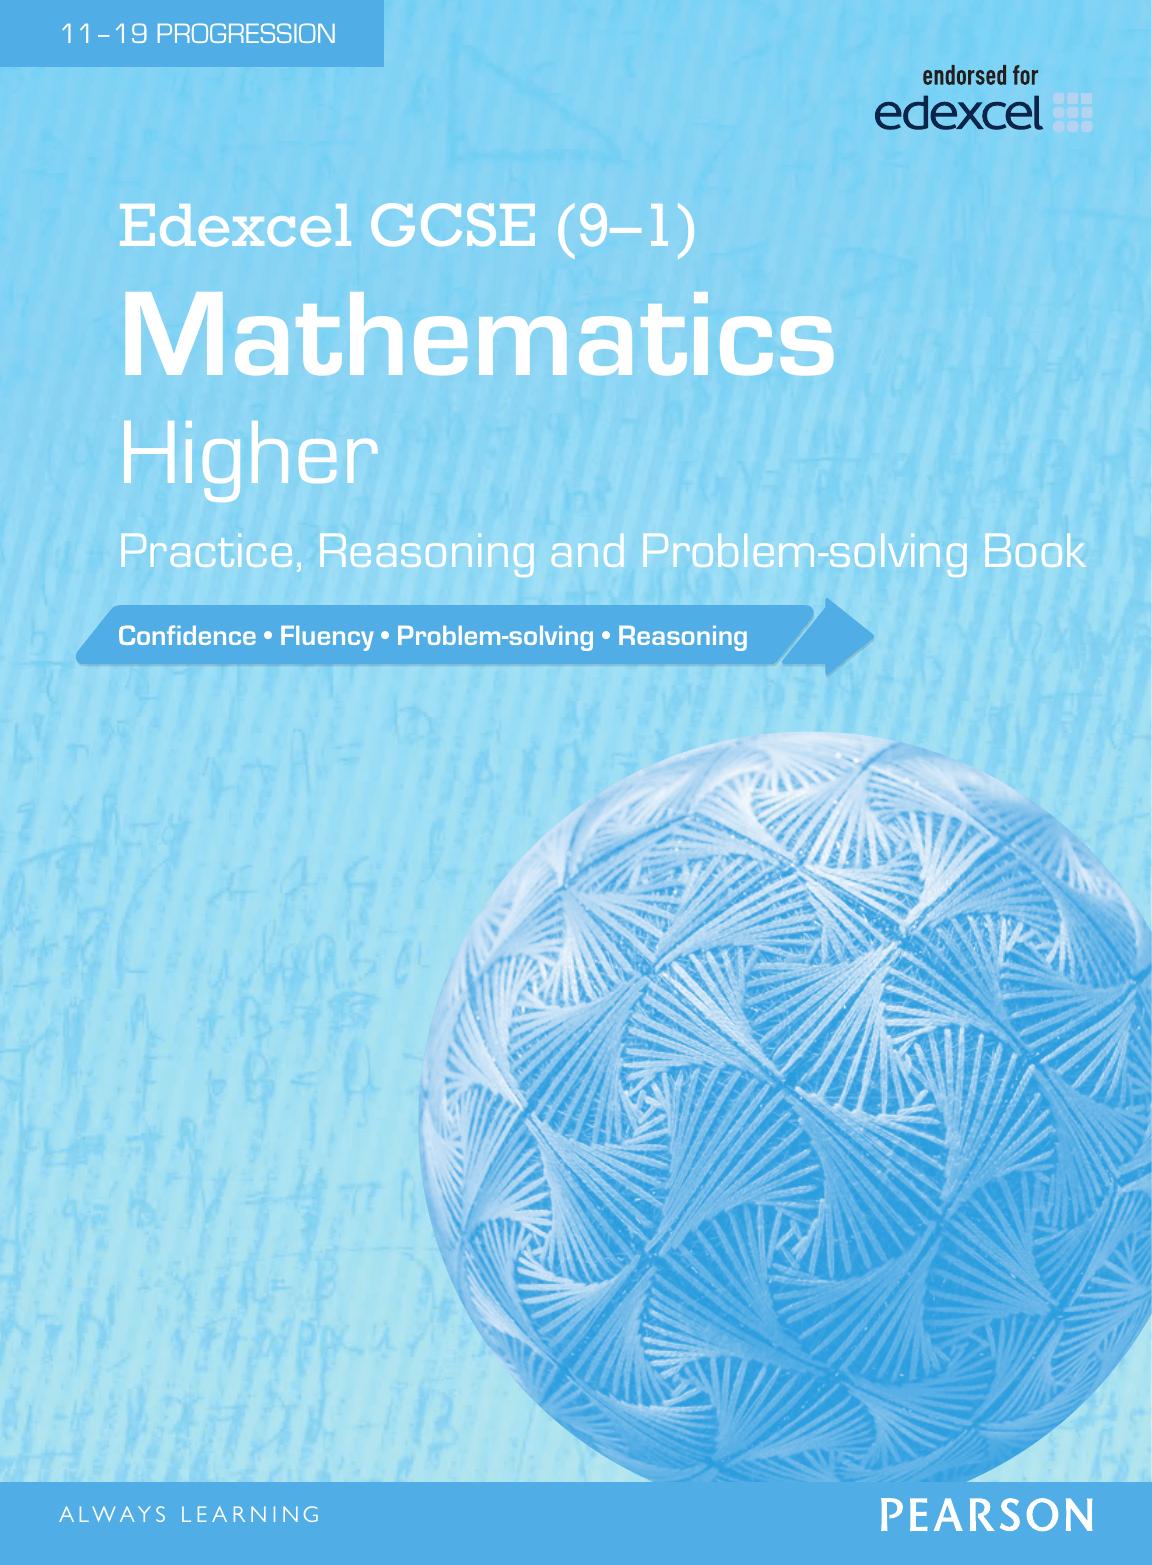 Edexcel GCSE (9-1) Mathematics: Higher Practice, Reasoning and Problem-Solving Book